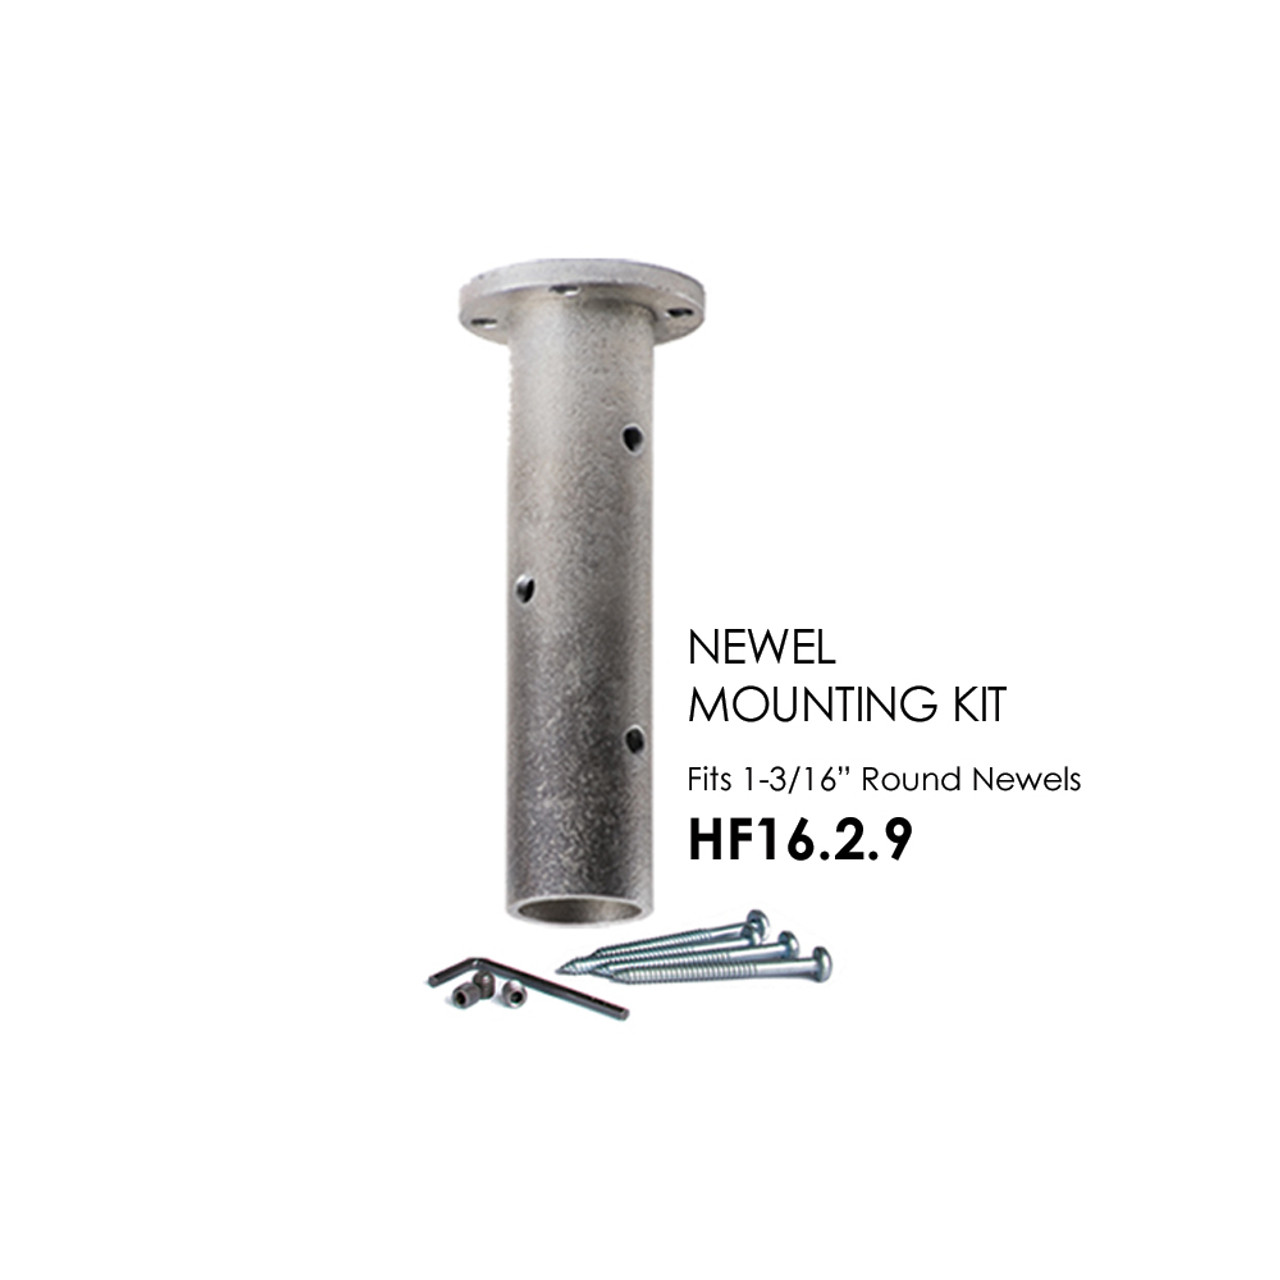 HF16.2.9 1-3/16" Round Newel Mounting Kit